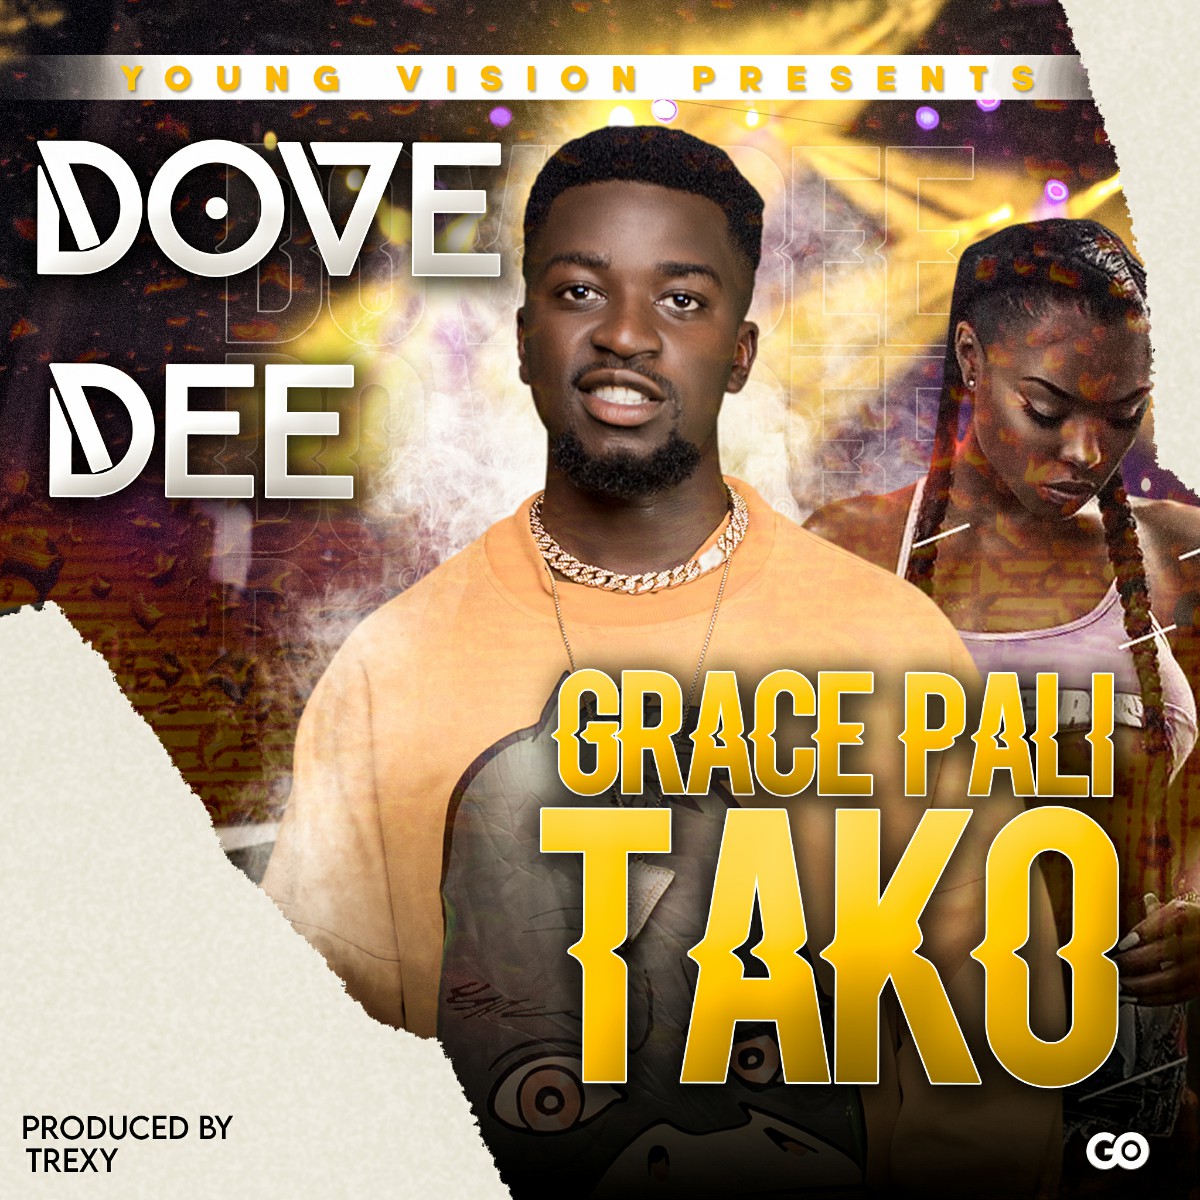 Dove Dee - Grace Pali Tako (Prod. Trexy)